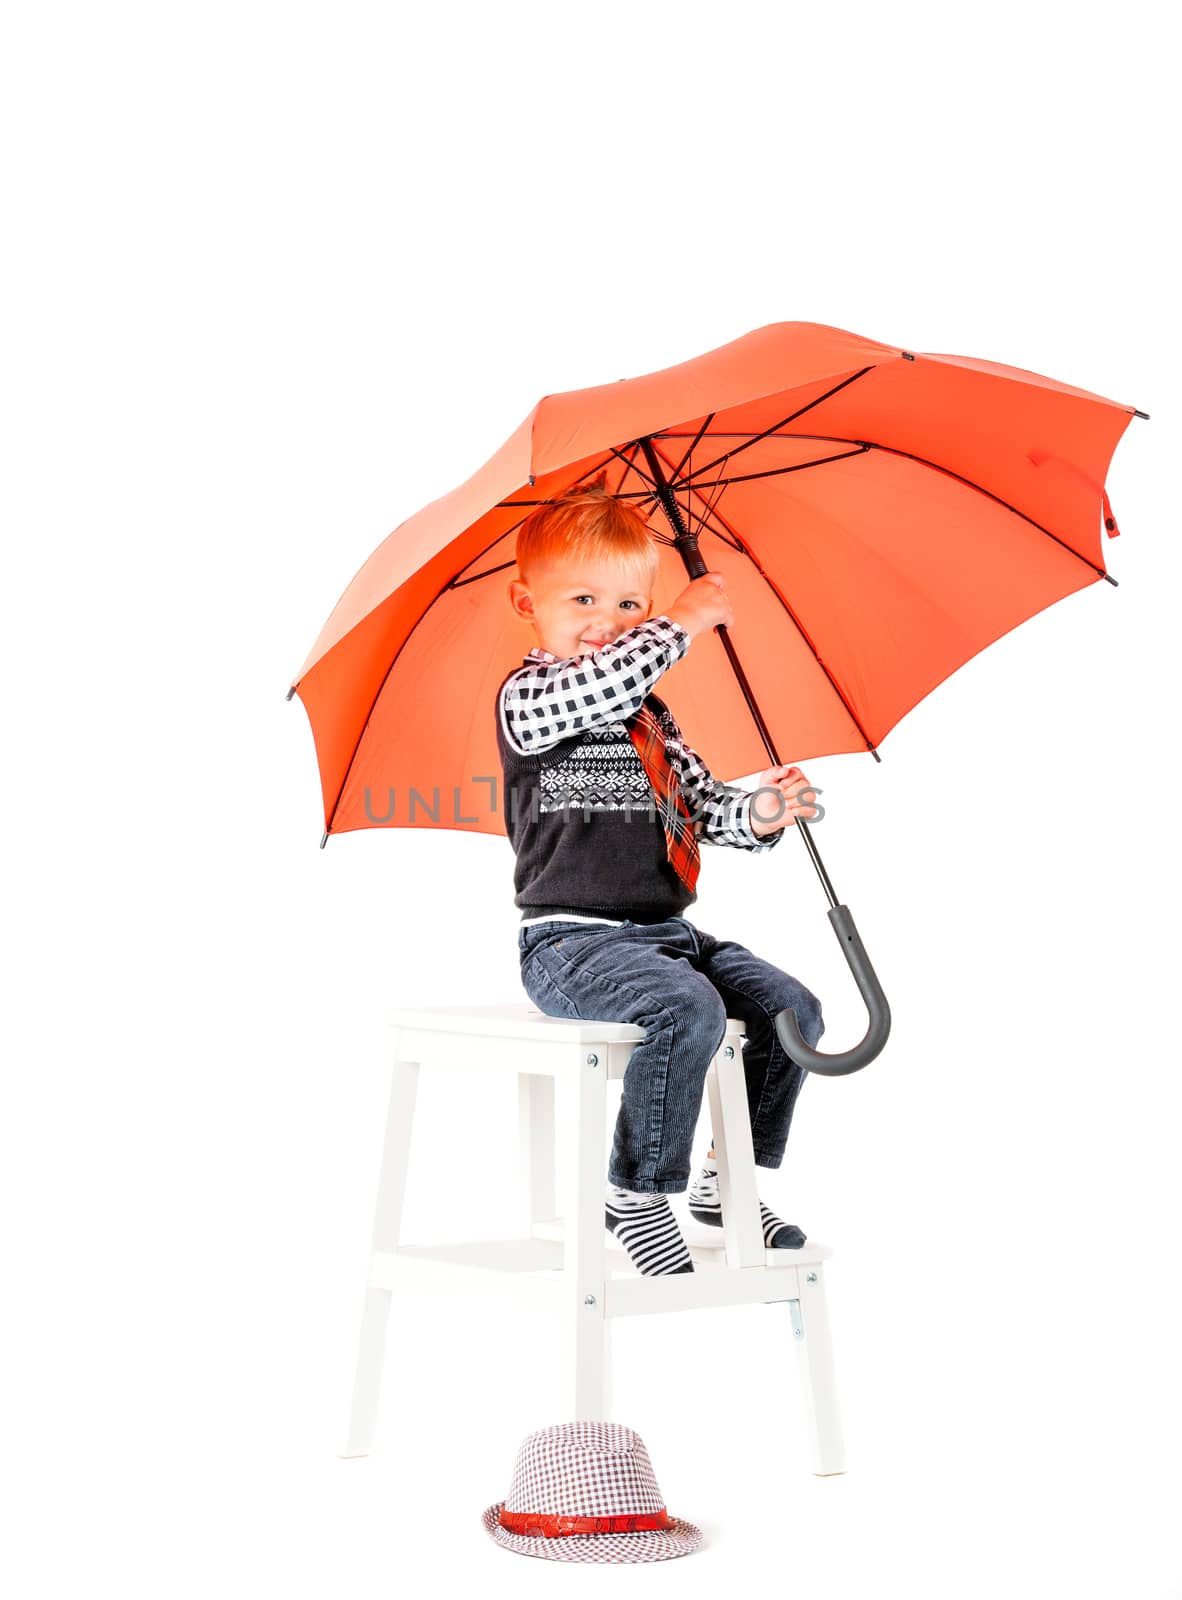 Boy with umbrella studio shot on a white background by Nanisimova